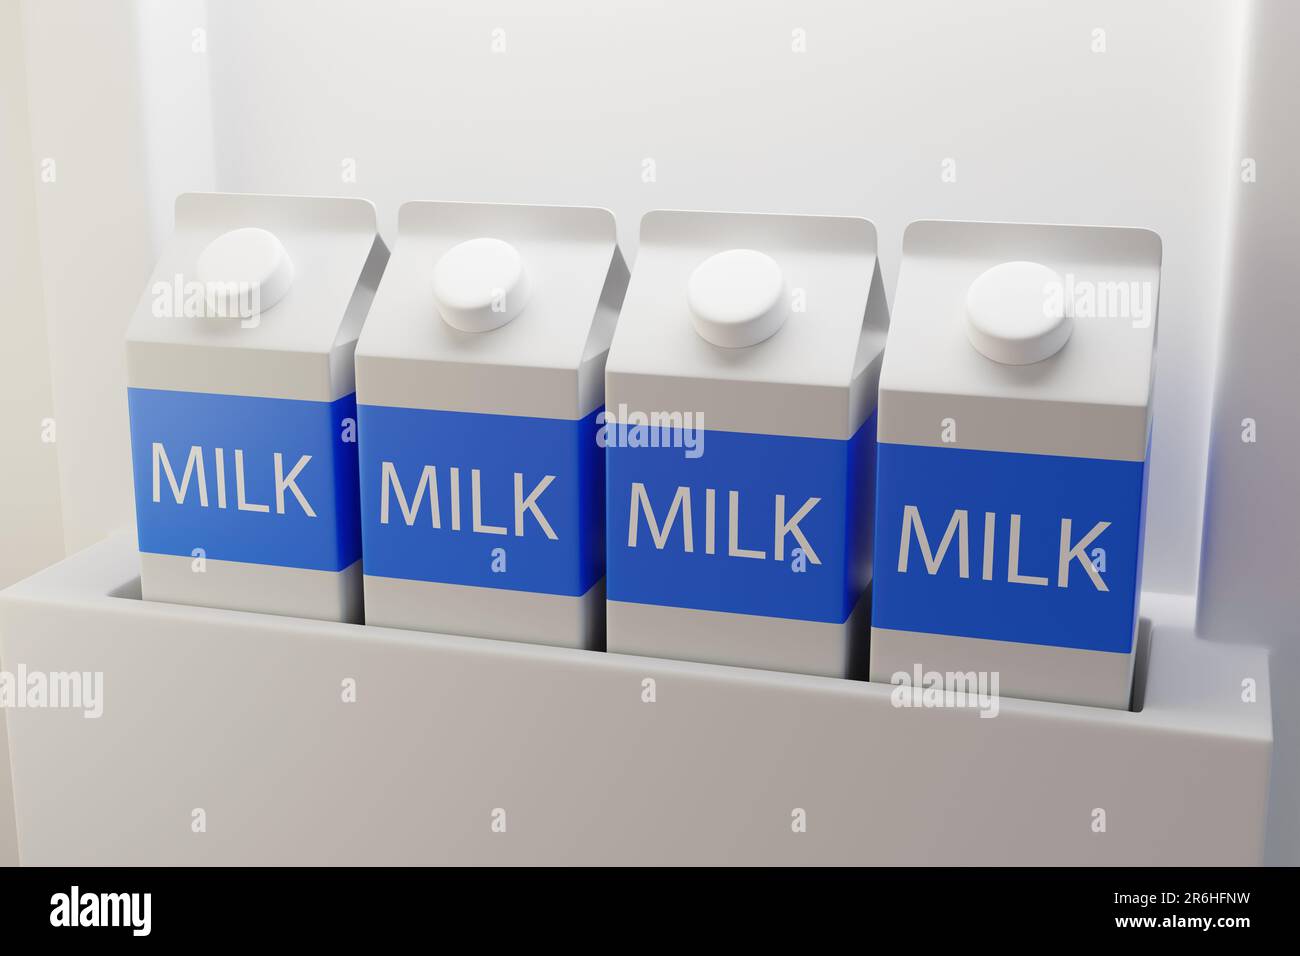 Door of fridge full of milk cartons. 3D illustration of the concept of dairy products, pasteurized milk and mistake of placing milk in the fridge door Stock Photo